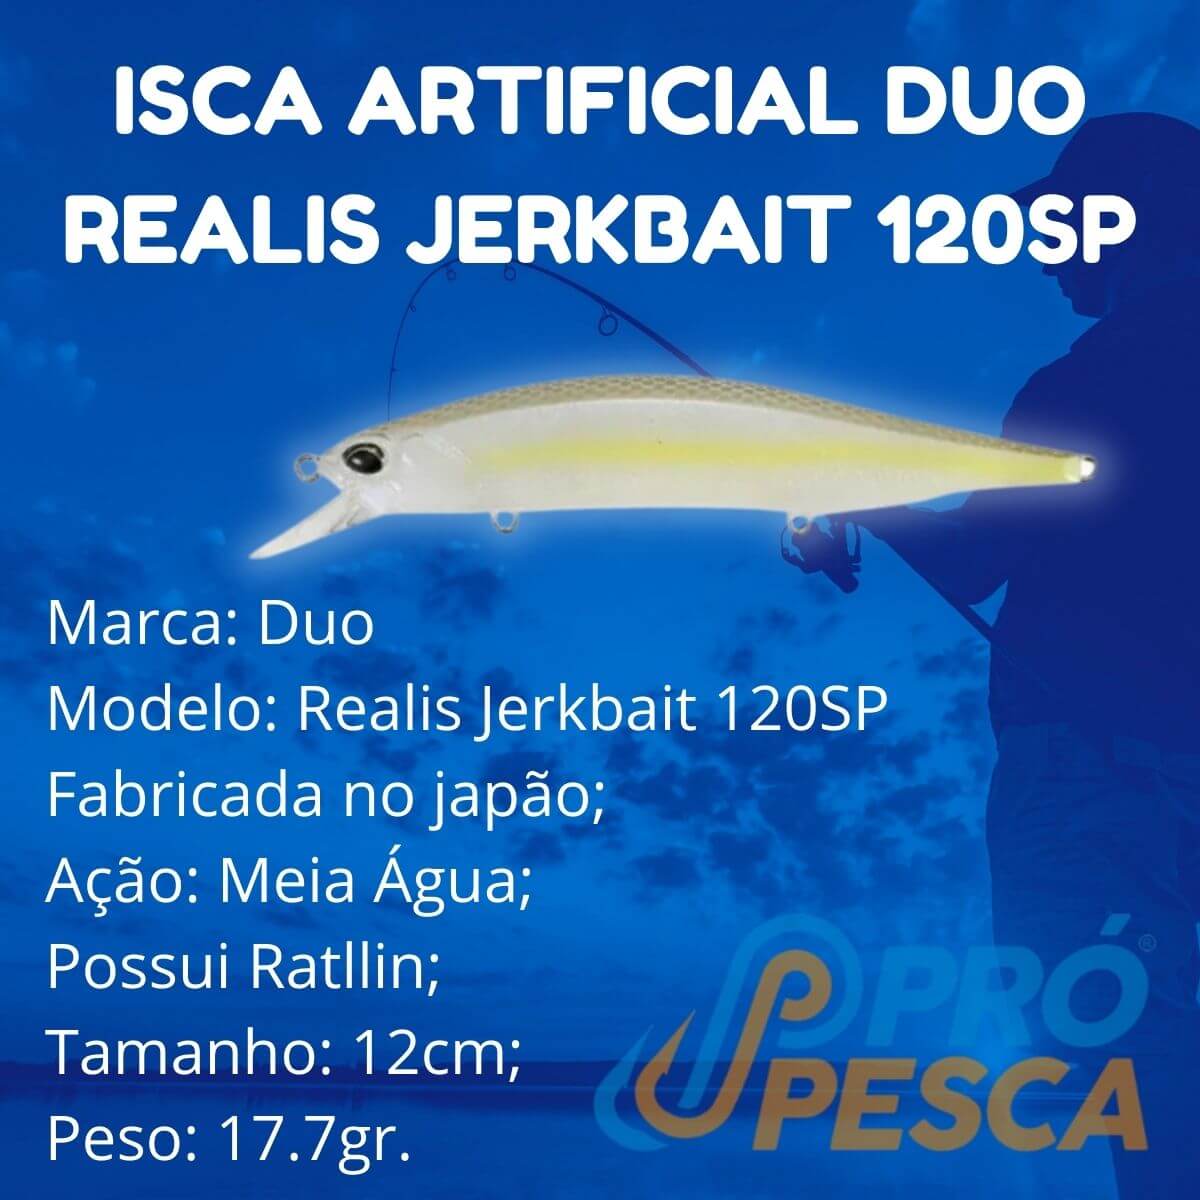 Isca Artificial Duo Realis Jerkbait 120SP - Foto 1